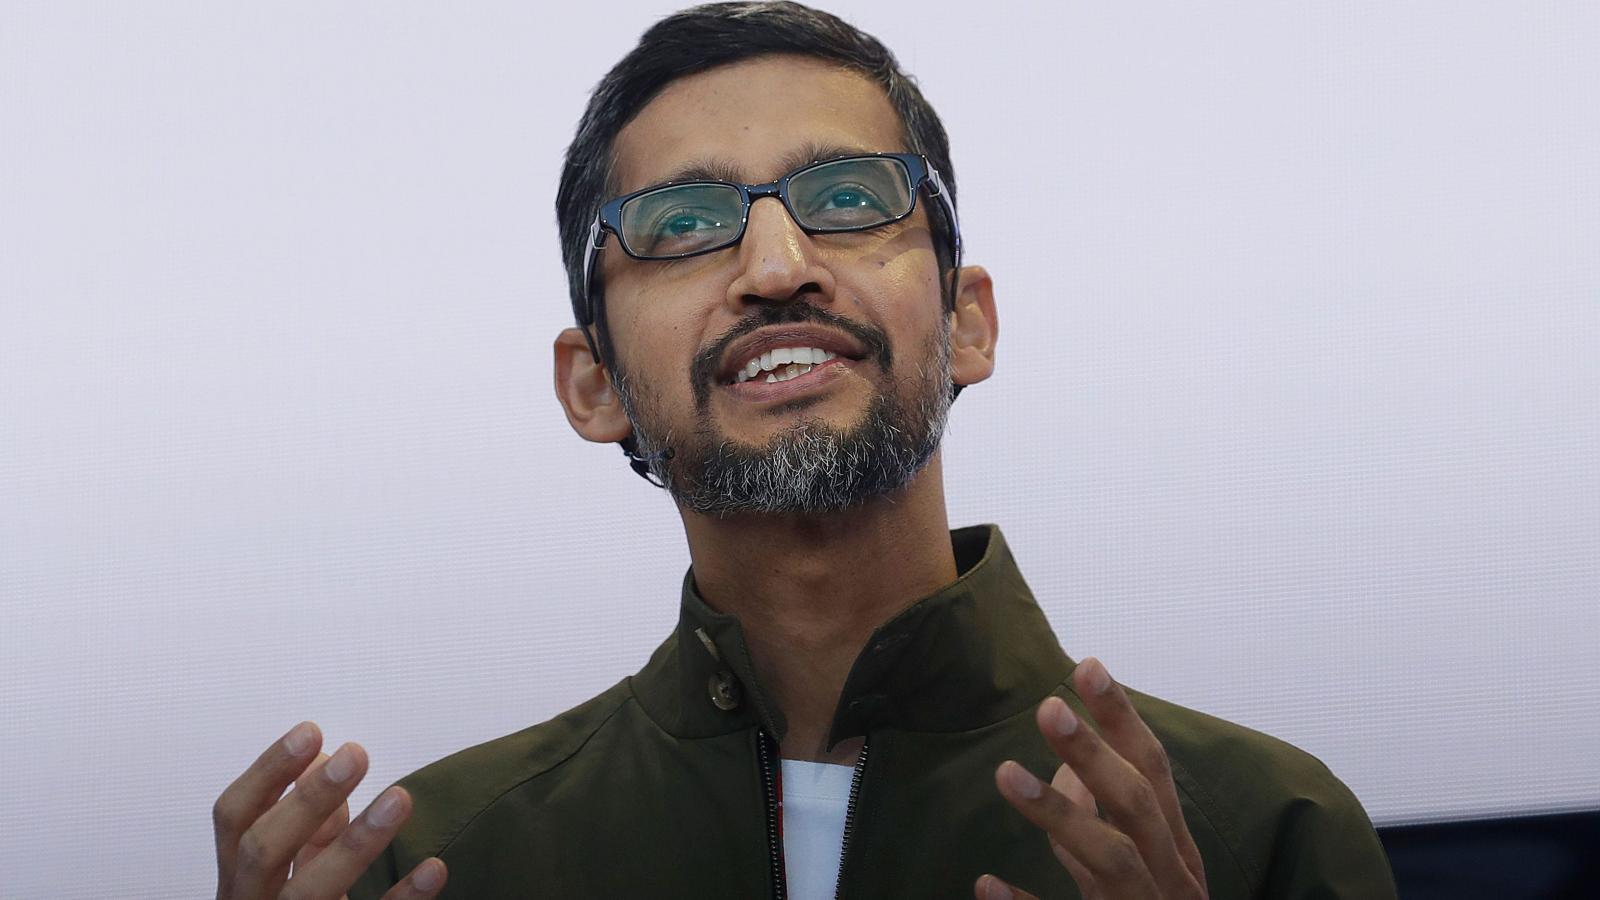 Google CEO Sundar Pichai responded to worldwide employee walkouts